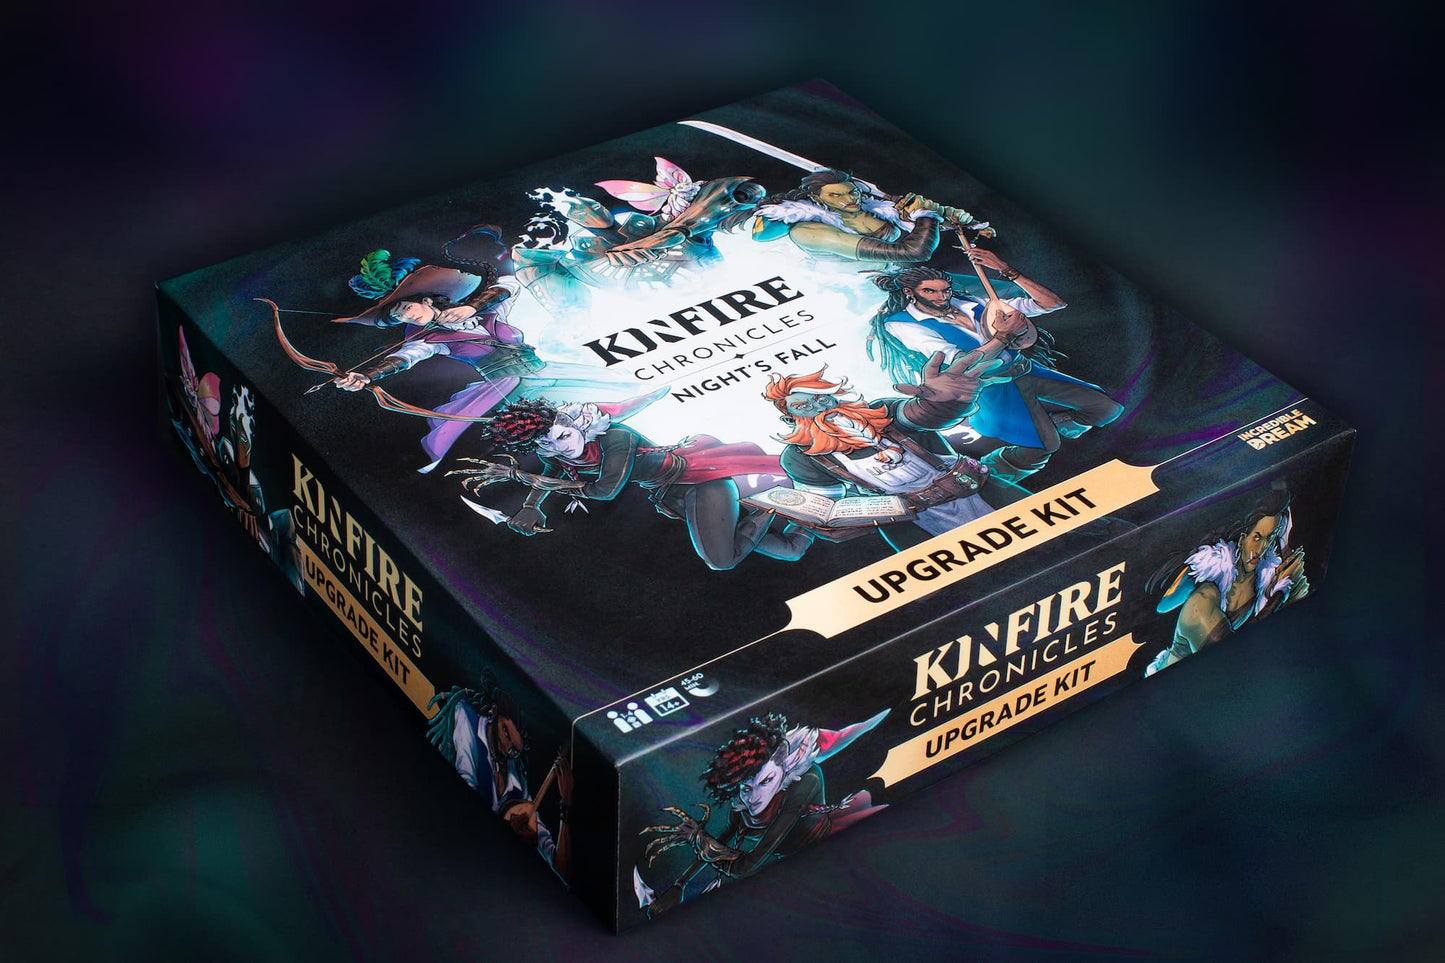 Bundle - Kinfire Chronicles: Night's Fall and Upgrade Kit (10% off)